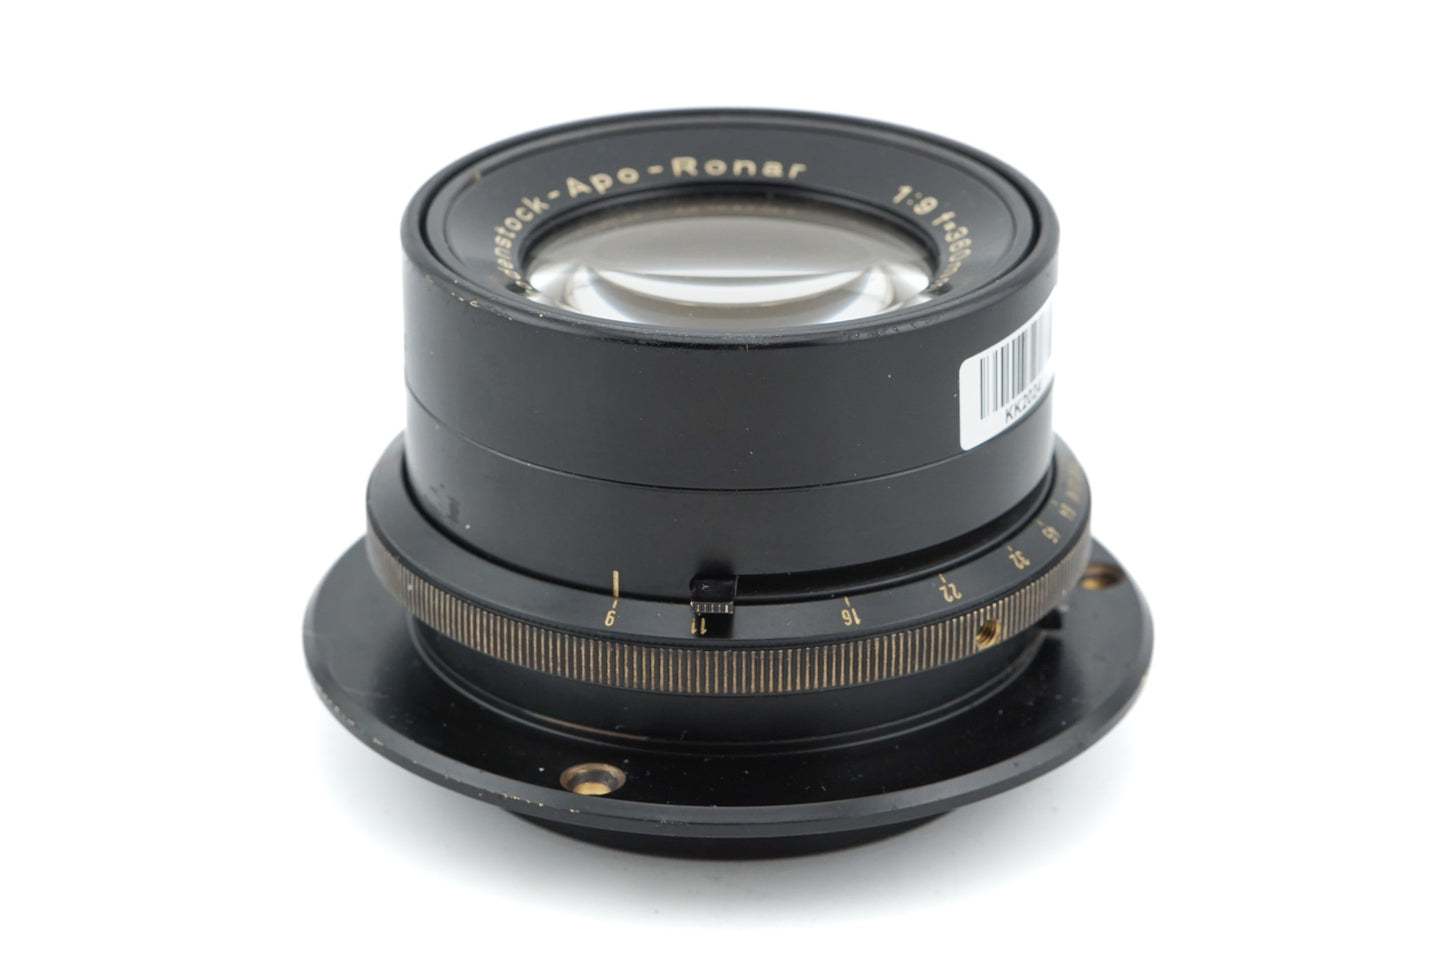 Rodenstock 360mm f9 Apo-Ronar - Lens